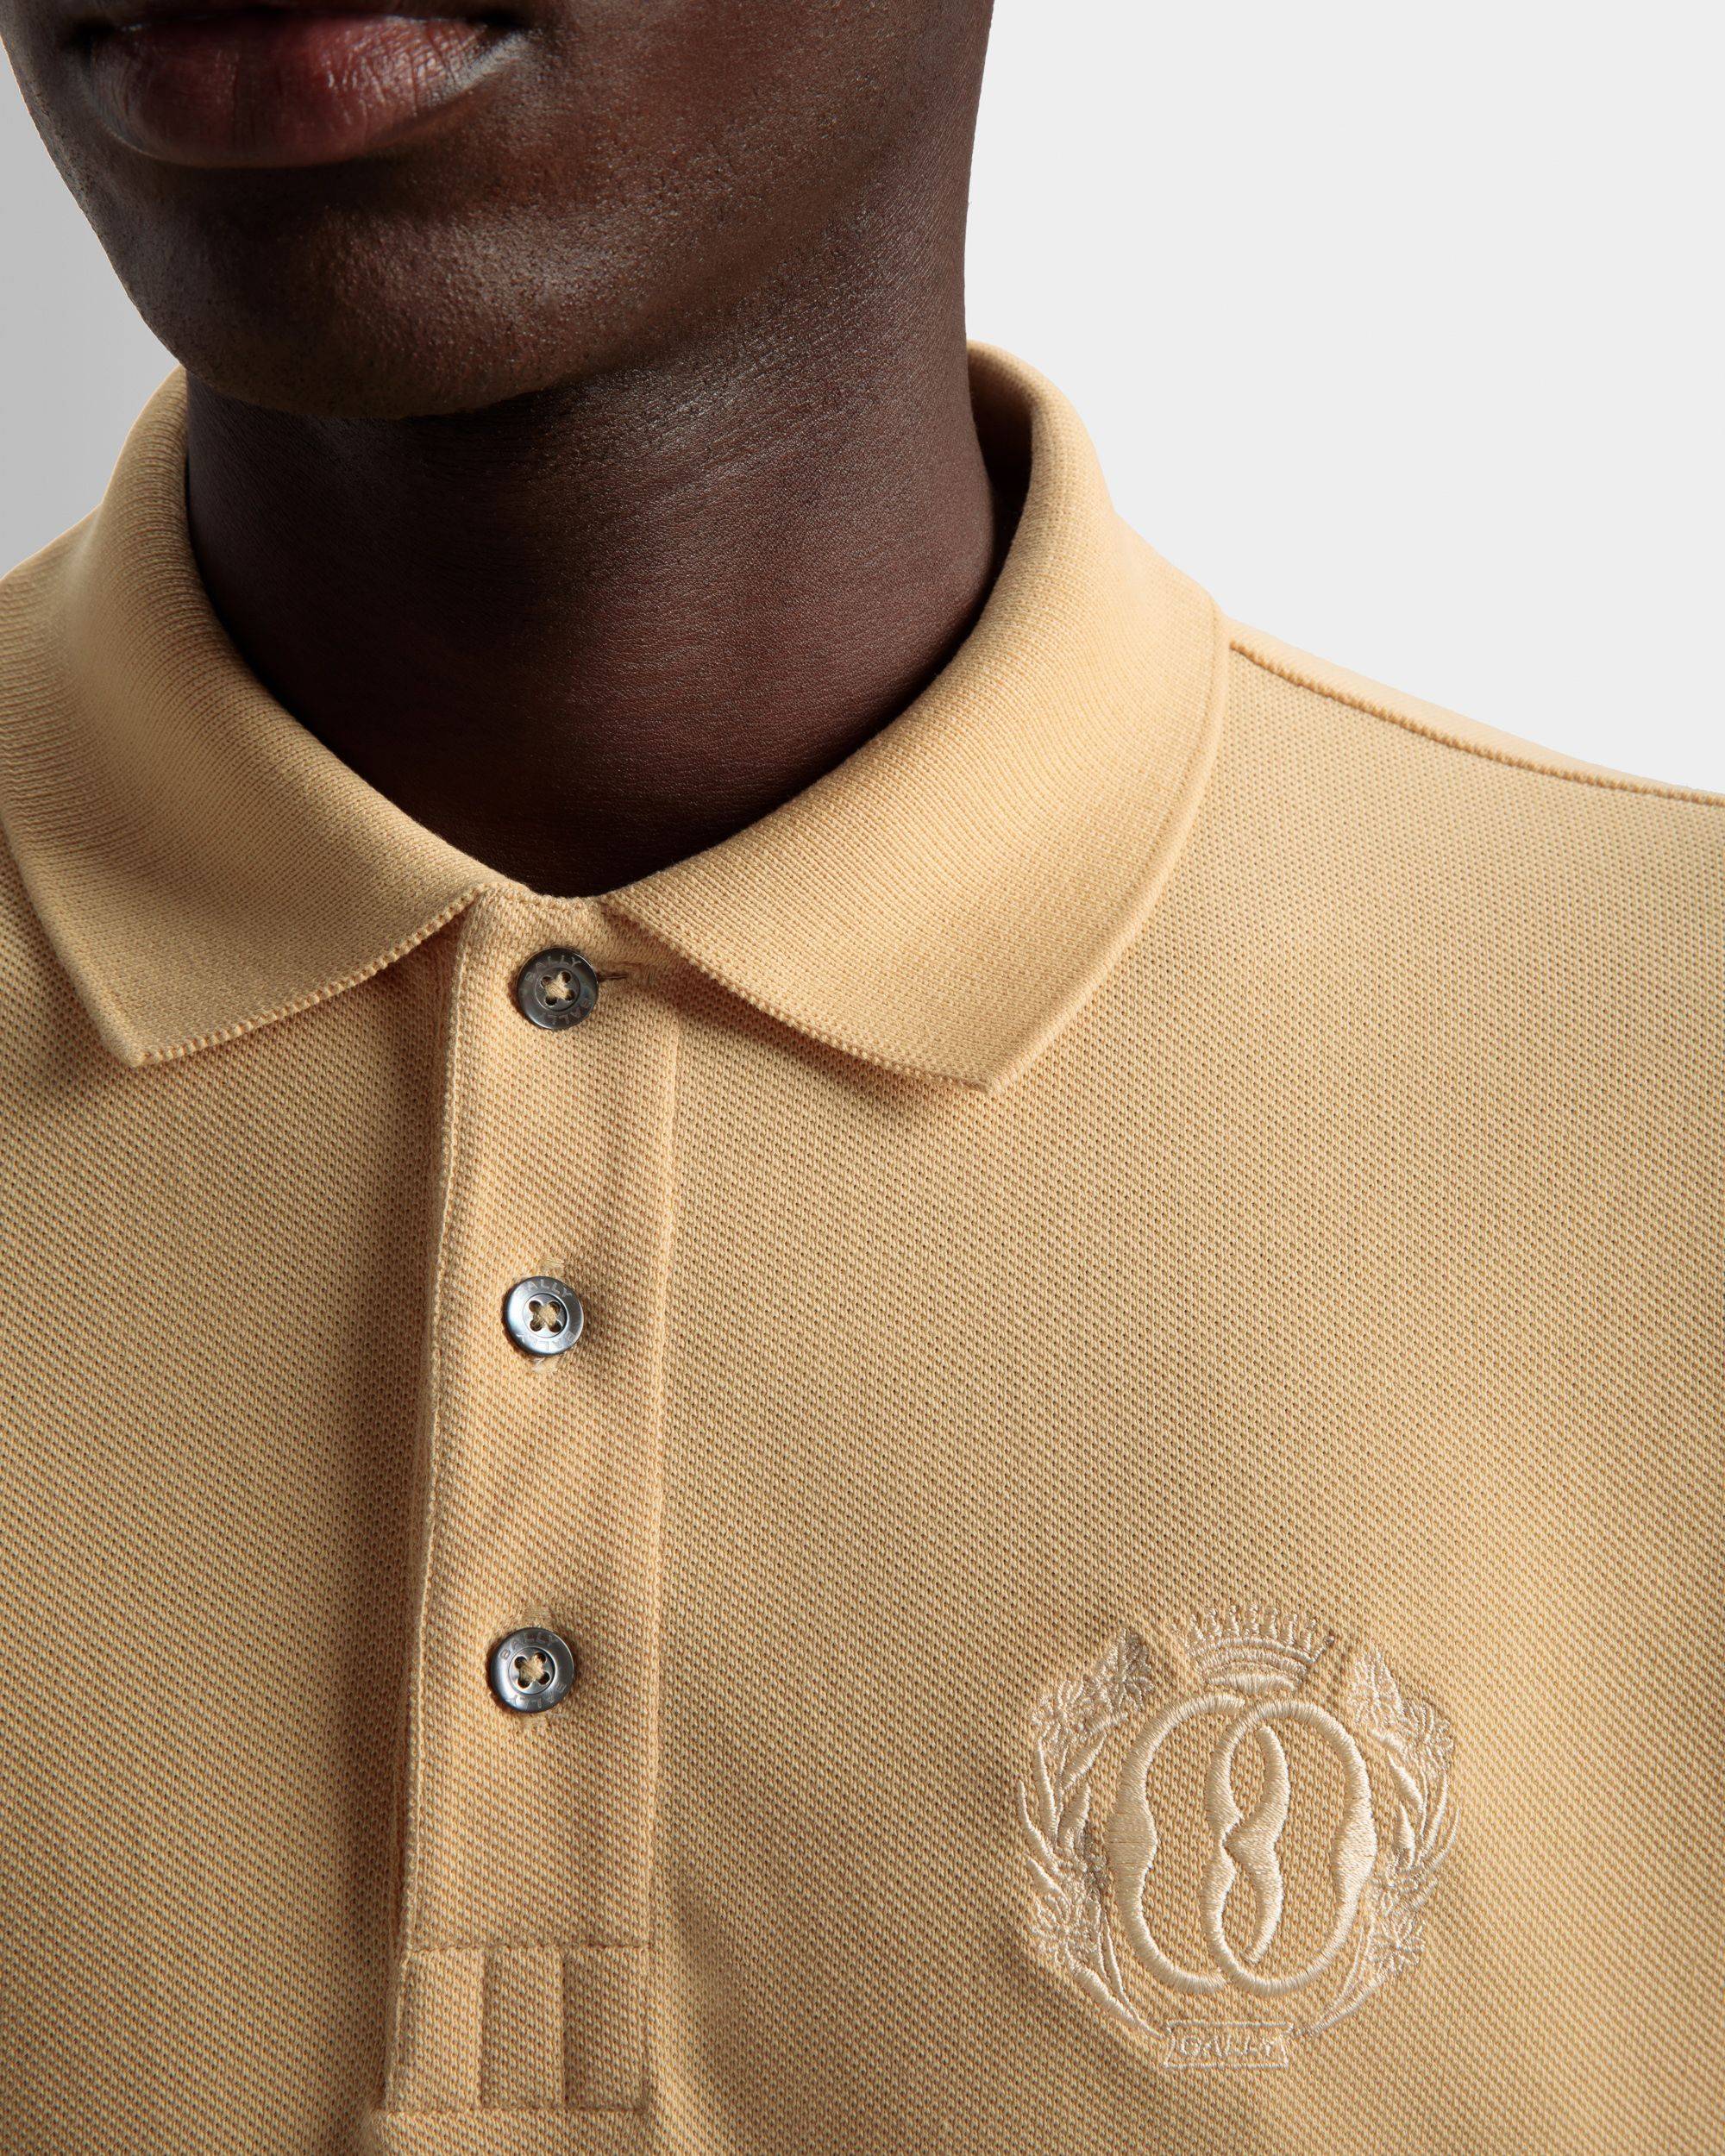 Emblem Poloshirt | Poloshirt für Herren | Cremefarbene Baumwolle | Bally | Model getragen Detail